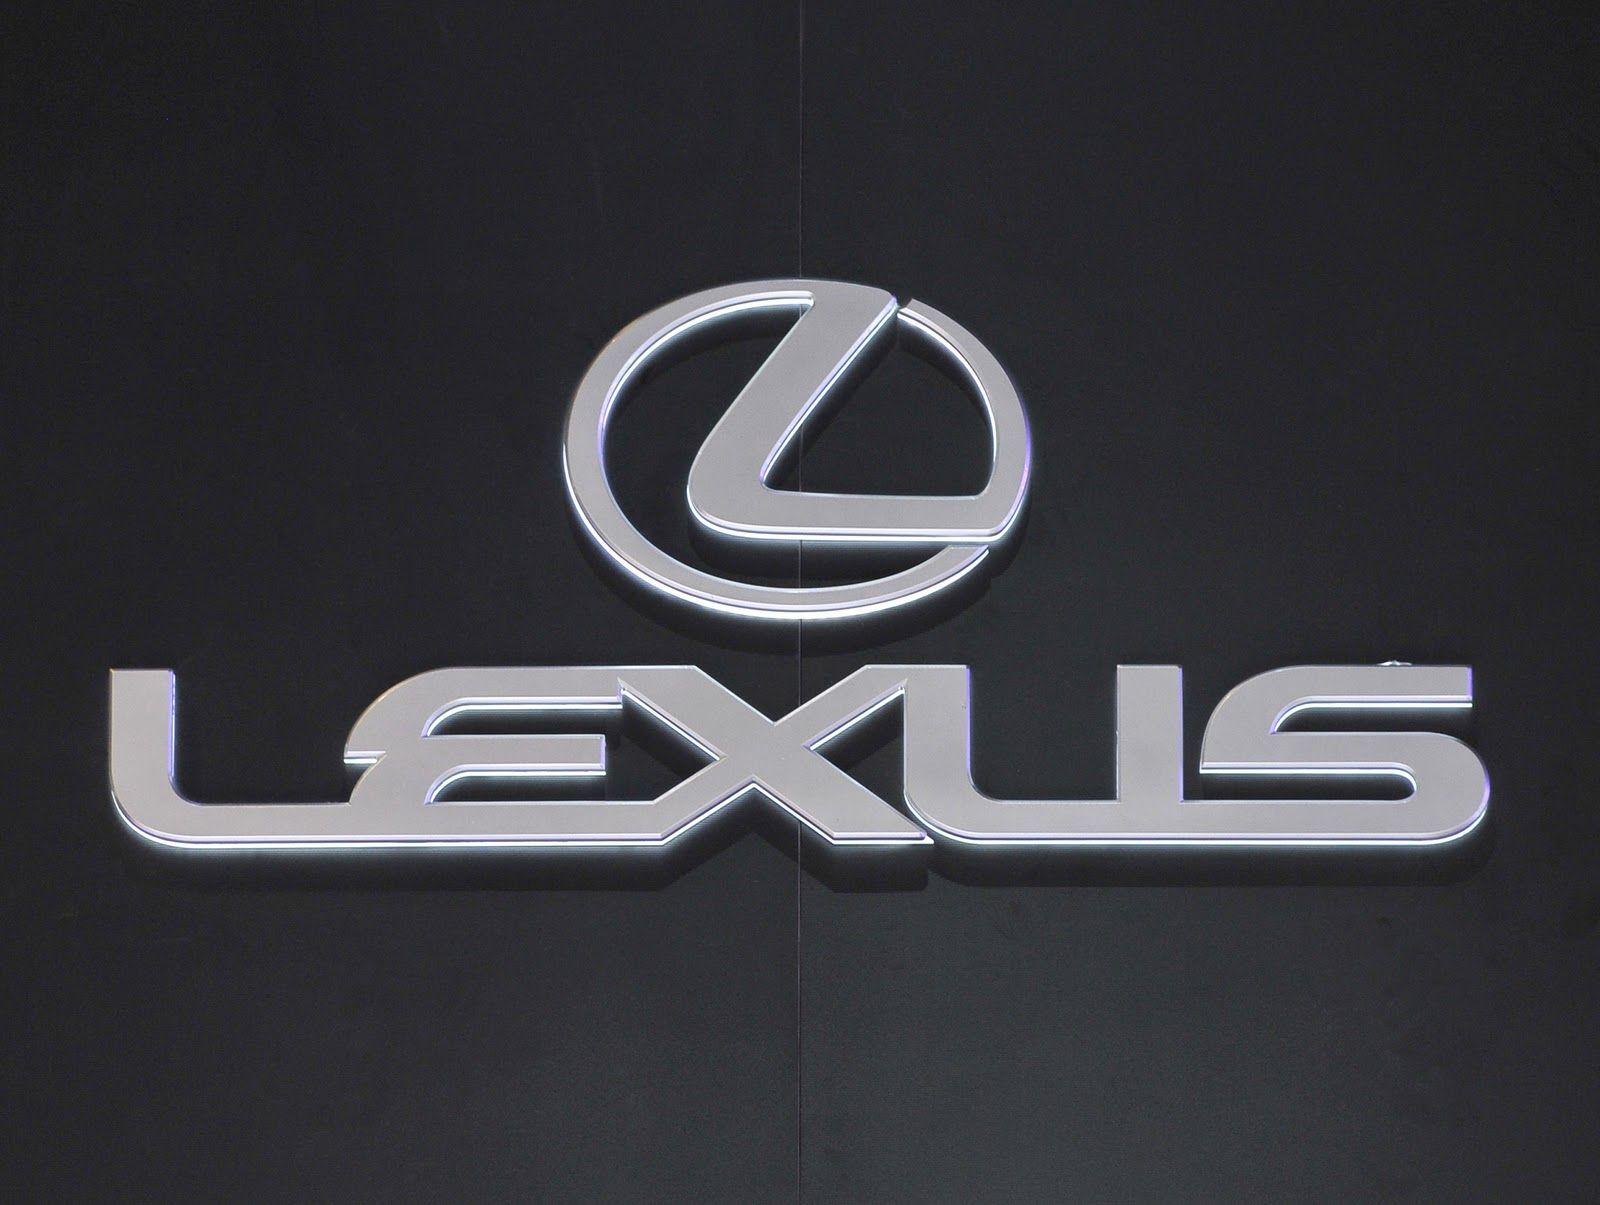 L Car Logo - Lexus Logo, Lexus Car Symbol Meaning and History | Car Brand Names.com